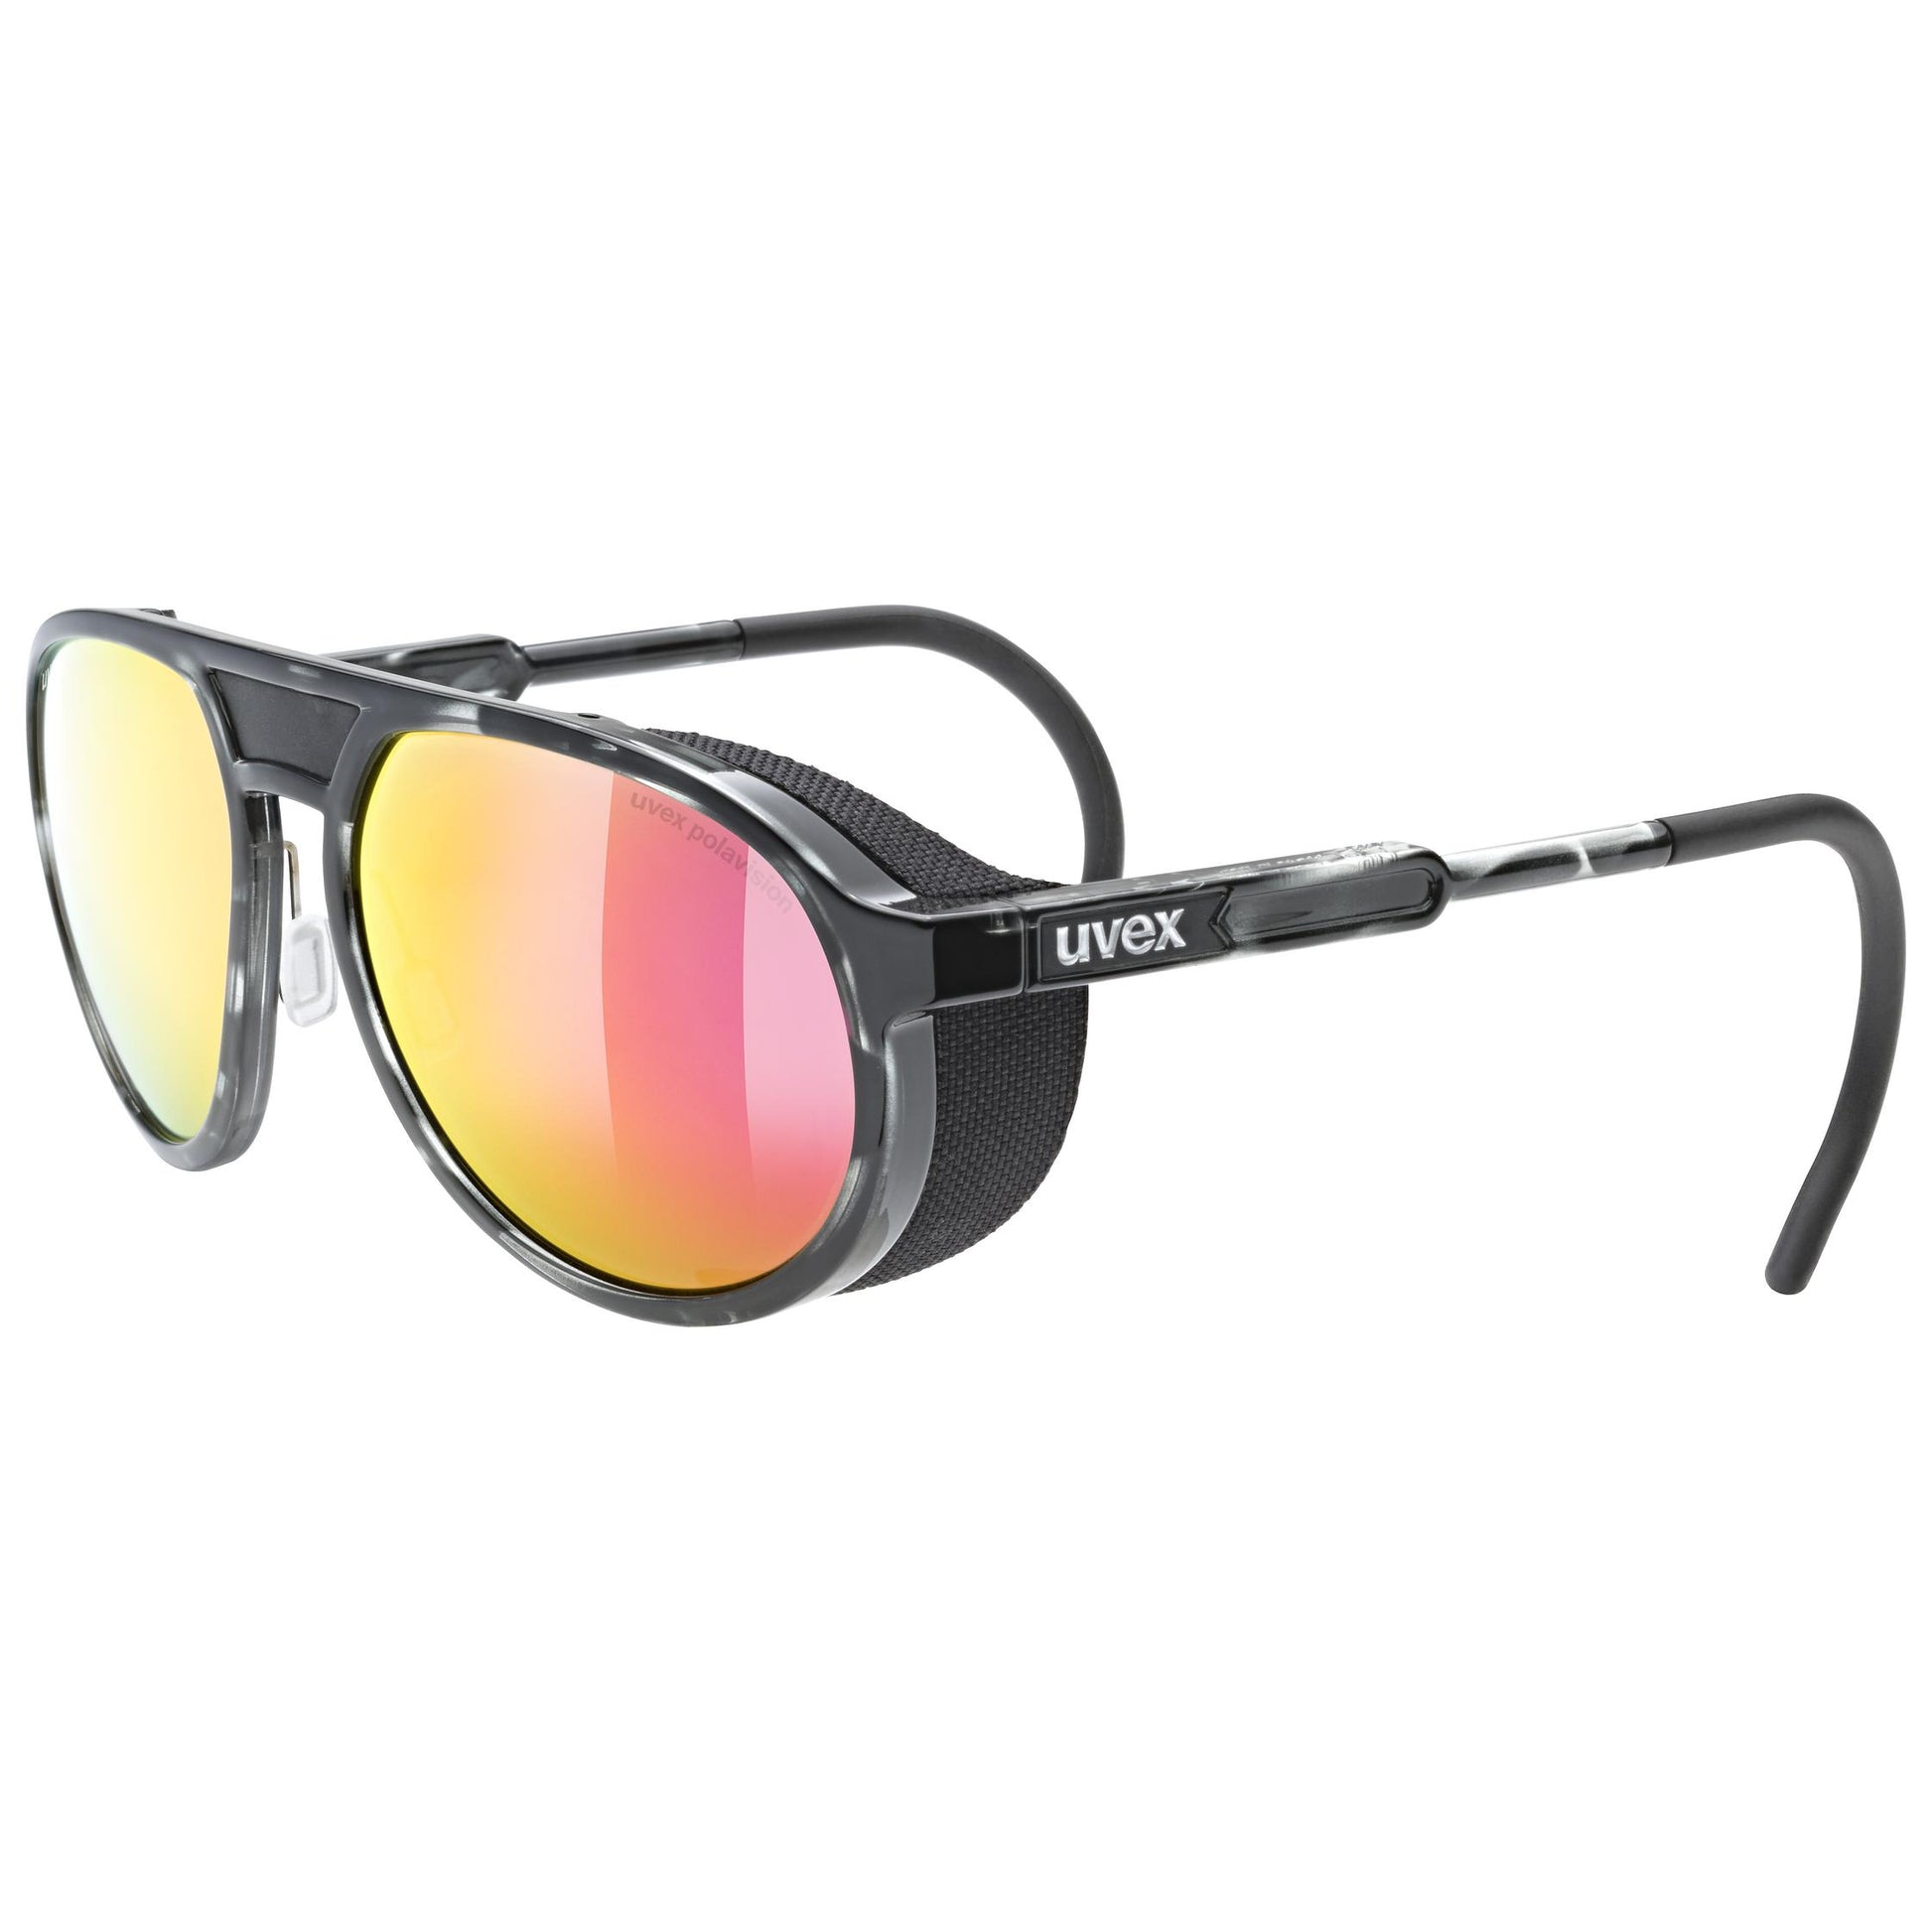 Uvex Mtn Classic P Sunglasses - Glacier Glasses with Polarized Lens Black Tortoise /Mirror Pink (Cat. 3)